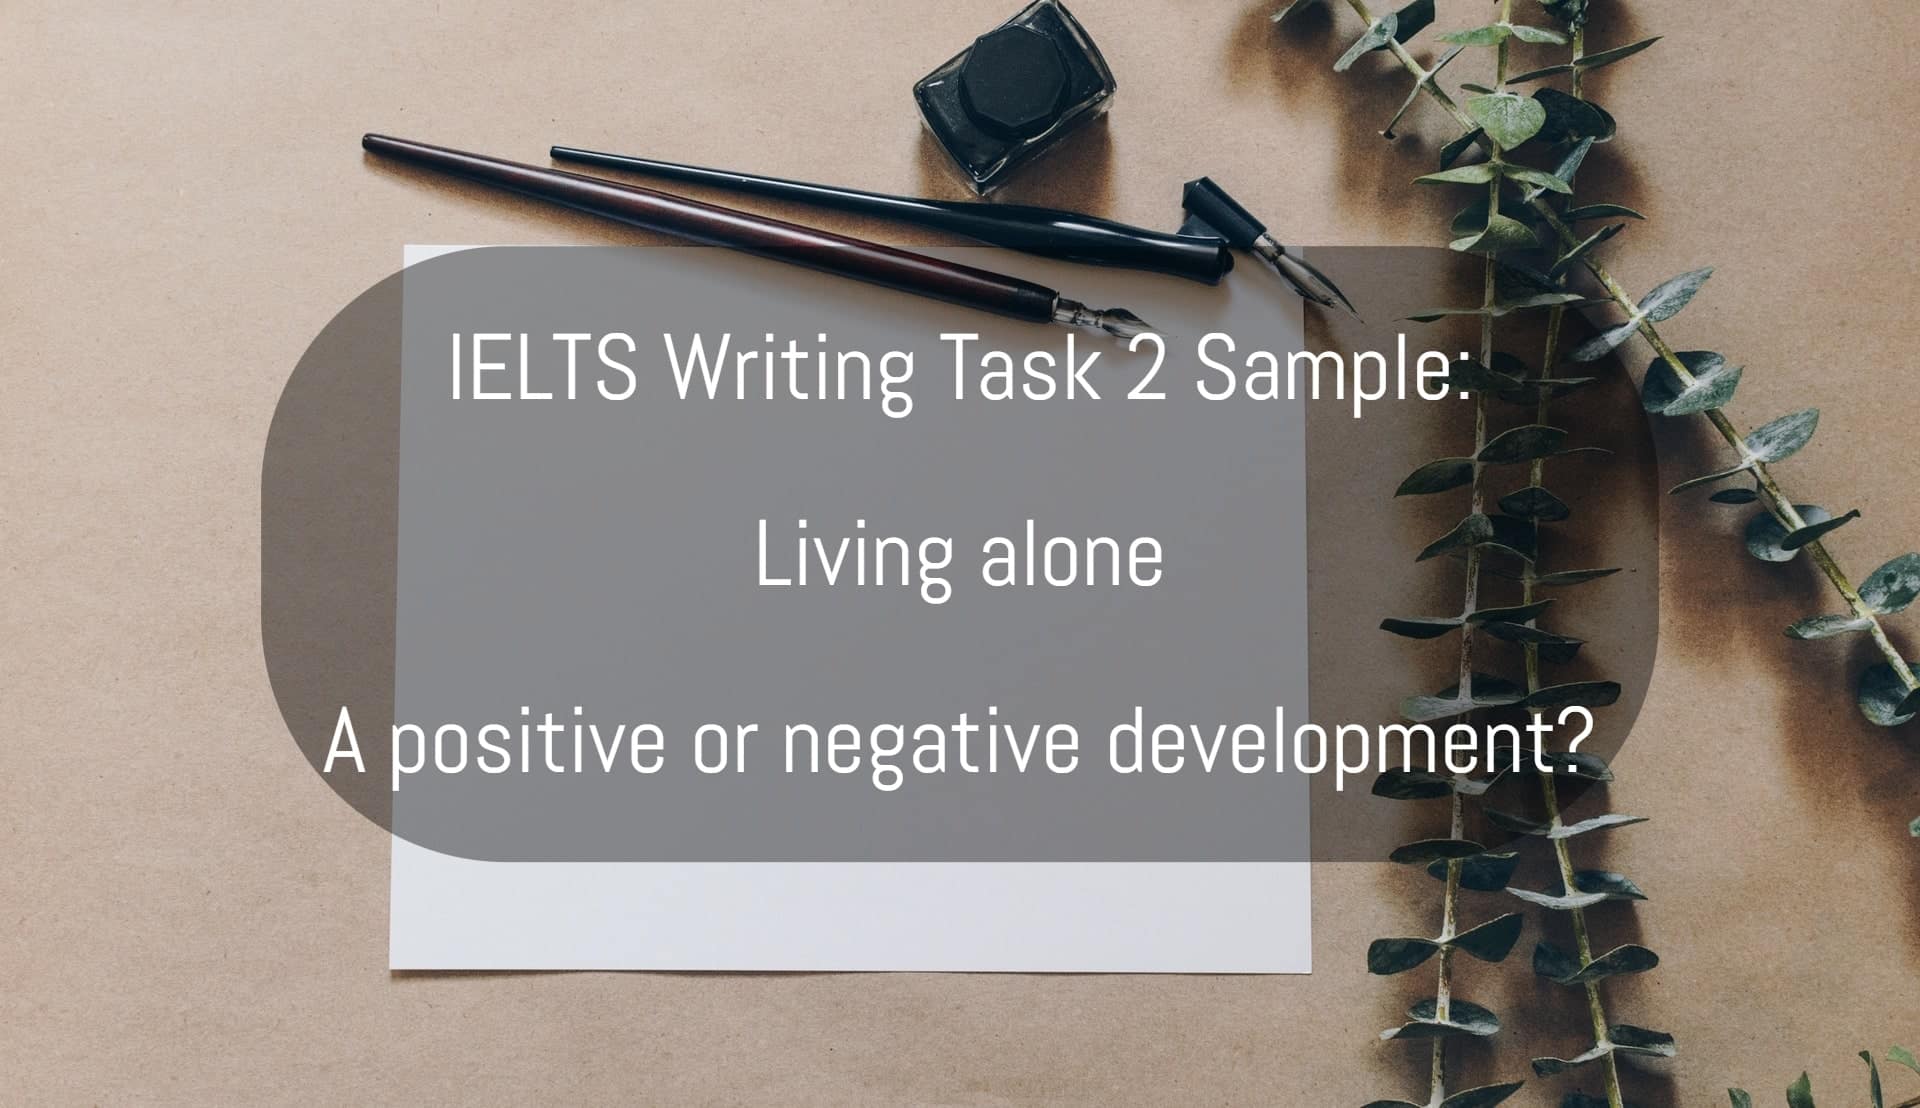 Ielts writing task 2 sample living alone positive or negative development